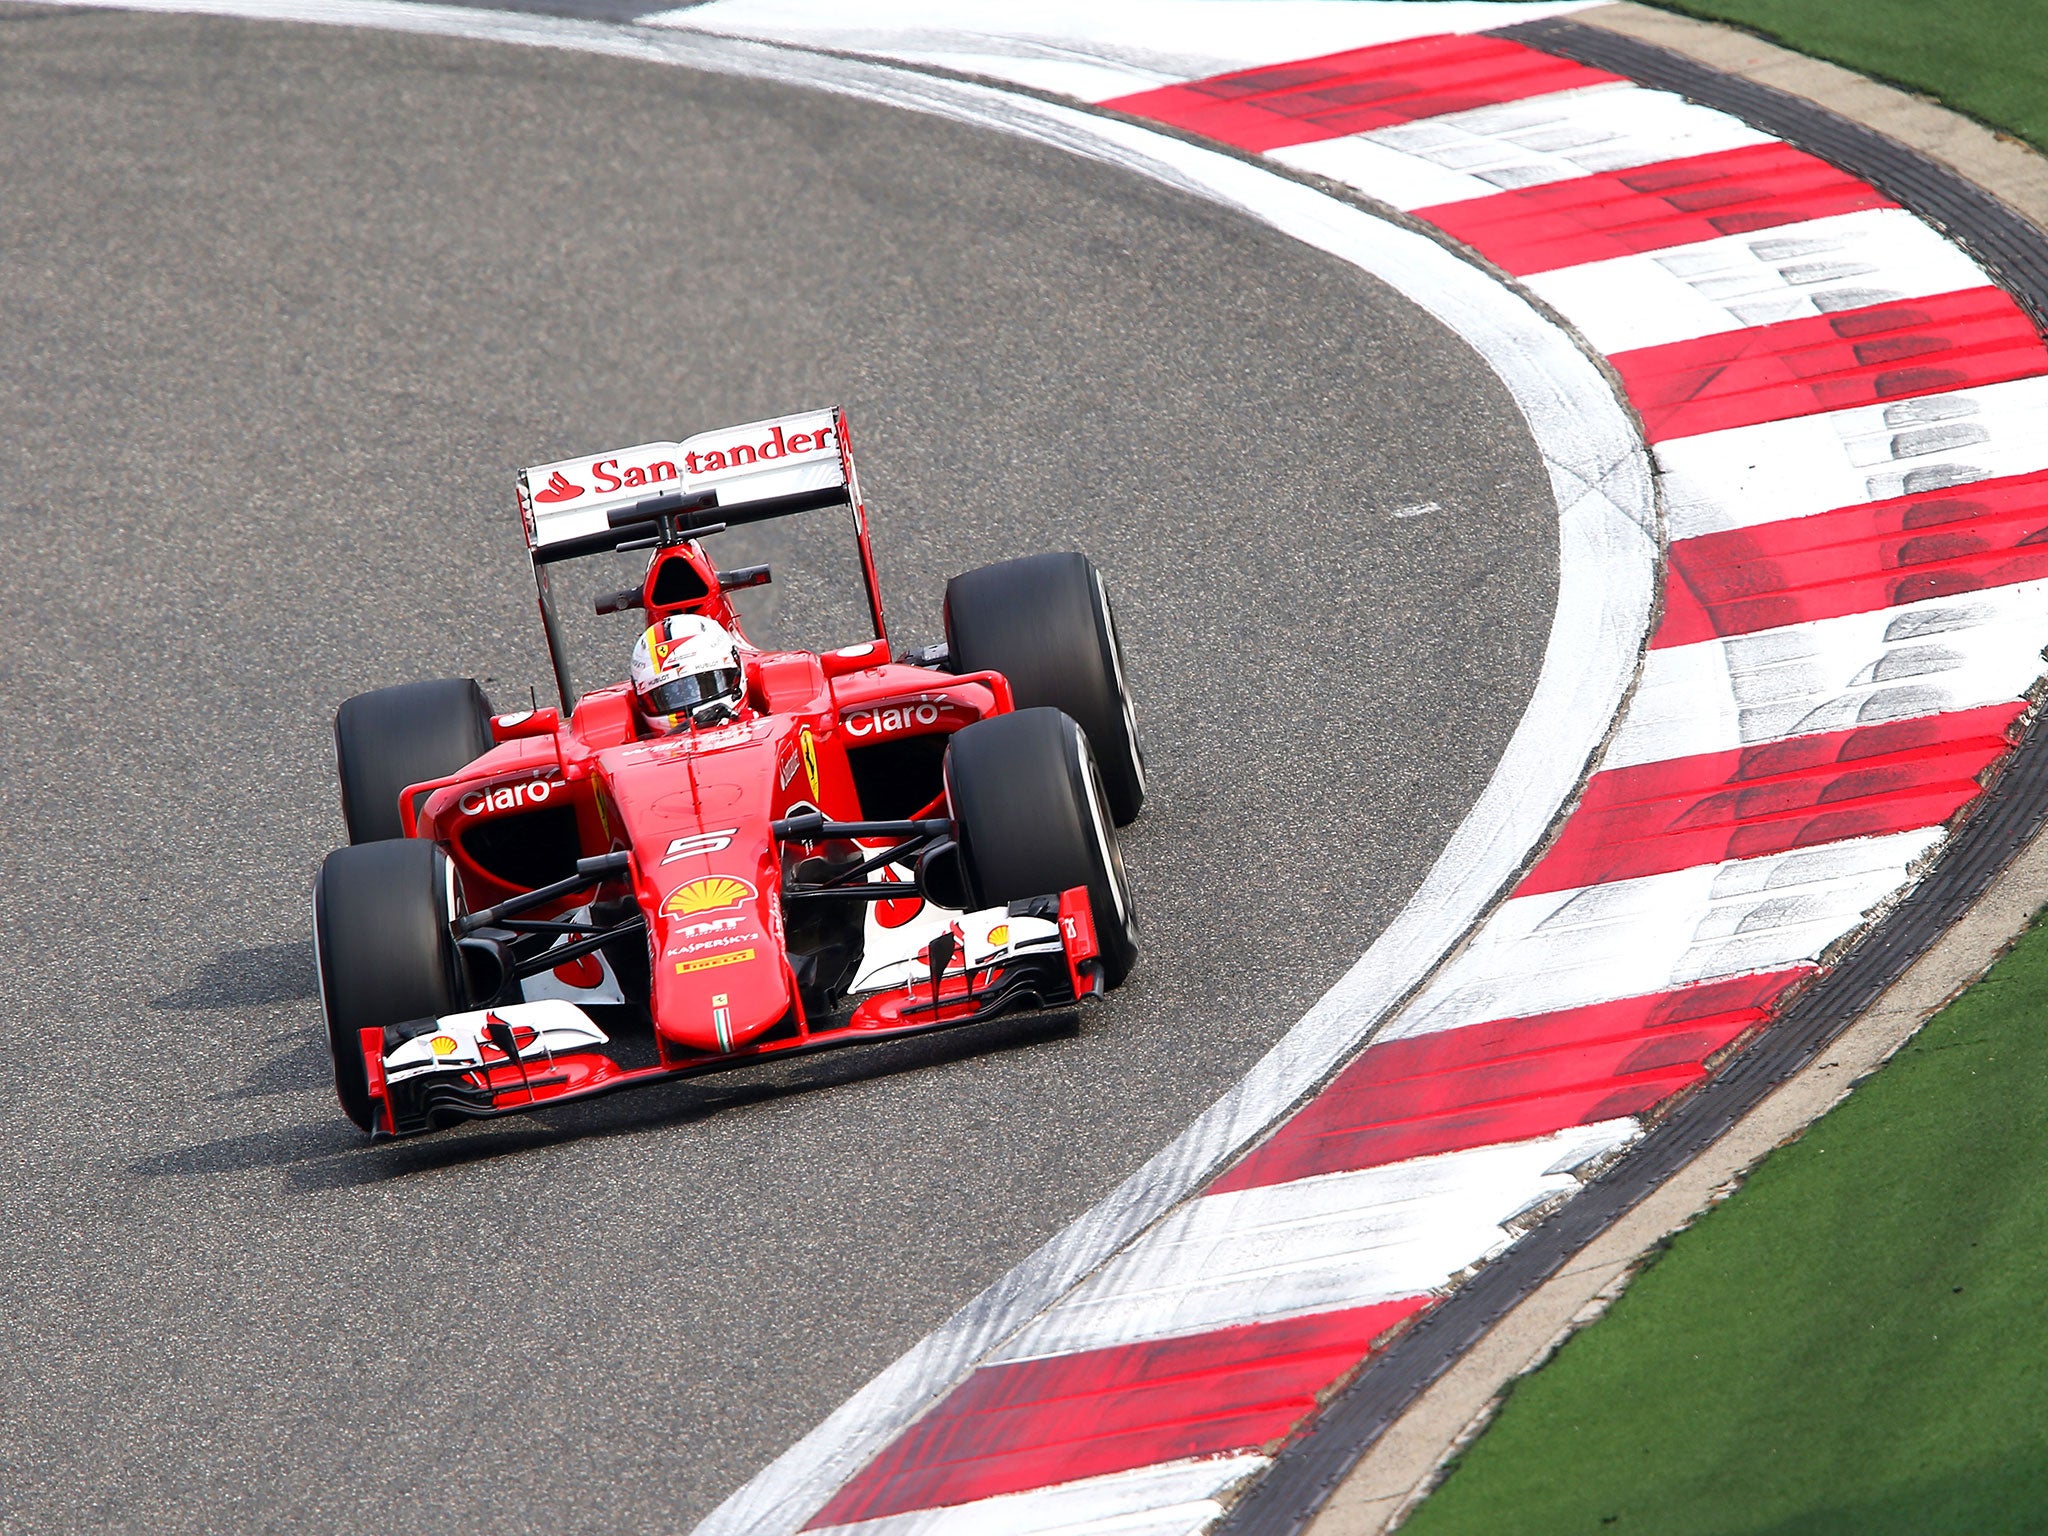 Sebastian Vettel wasn't able to follow up his win in Malaysia